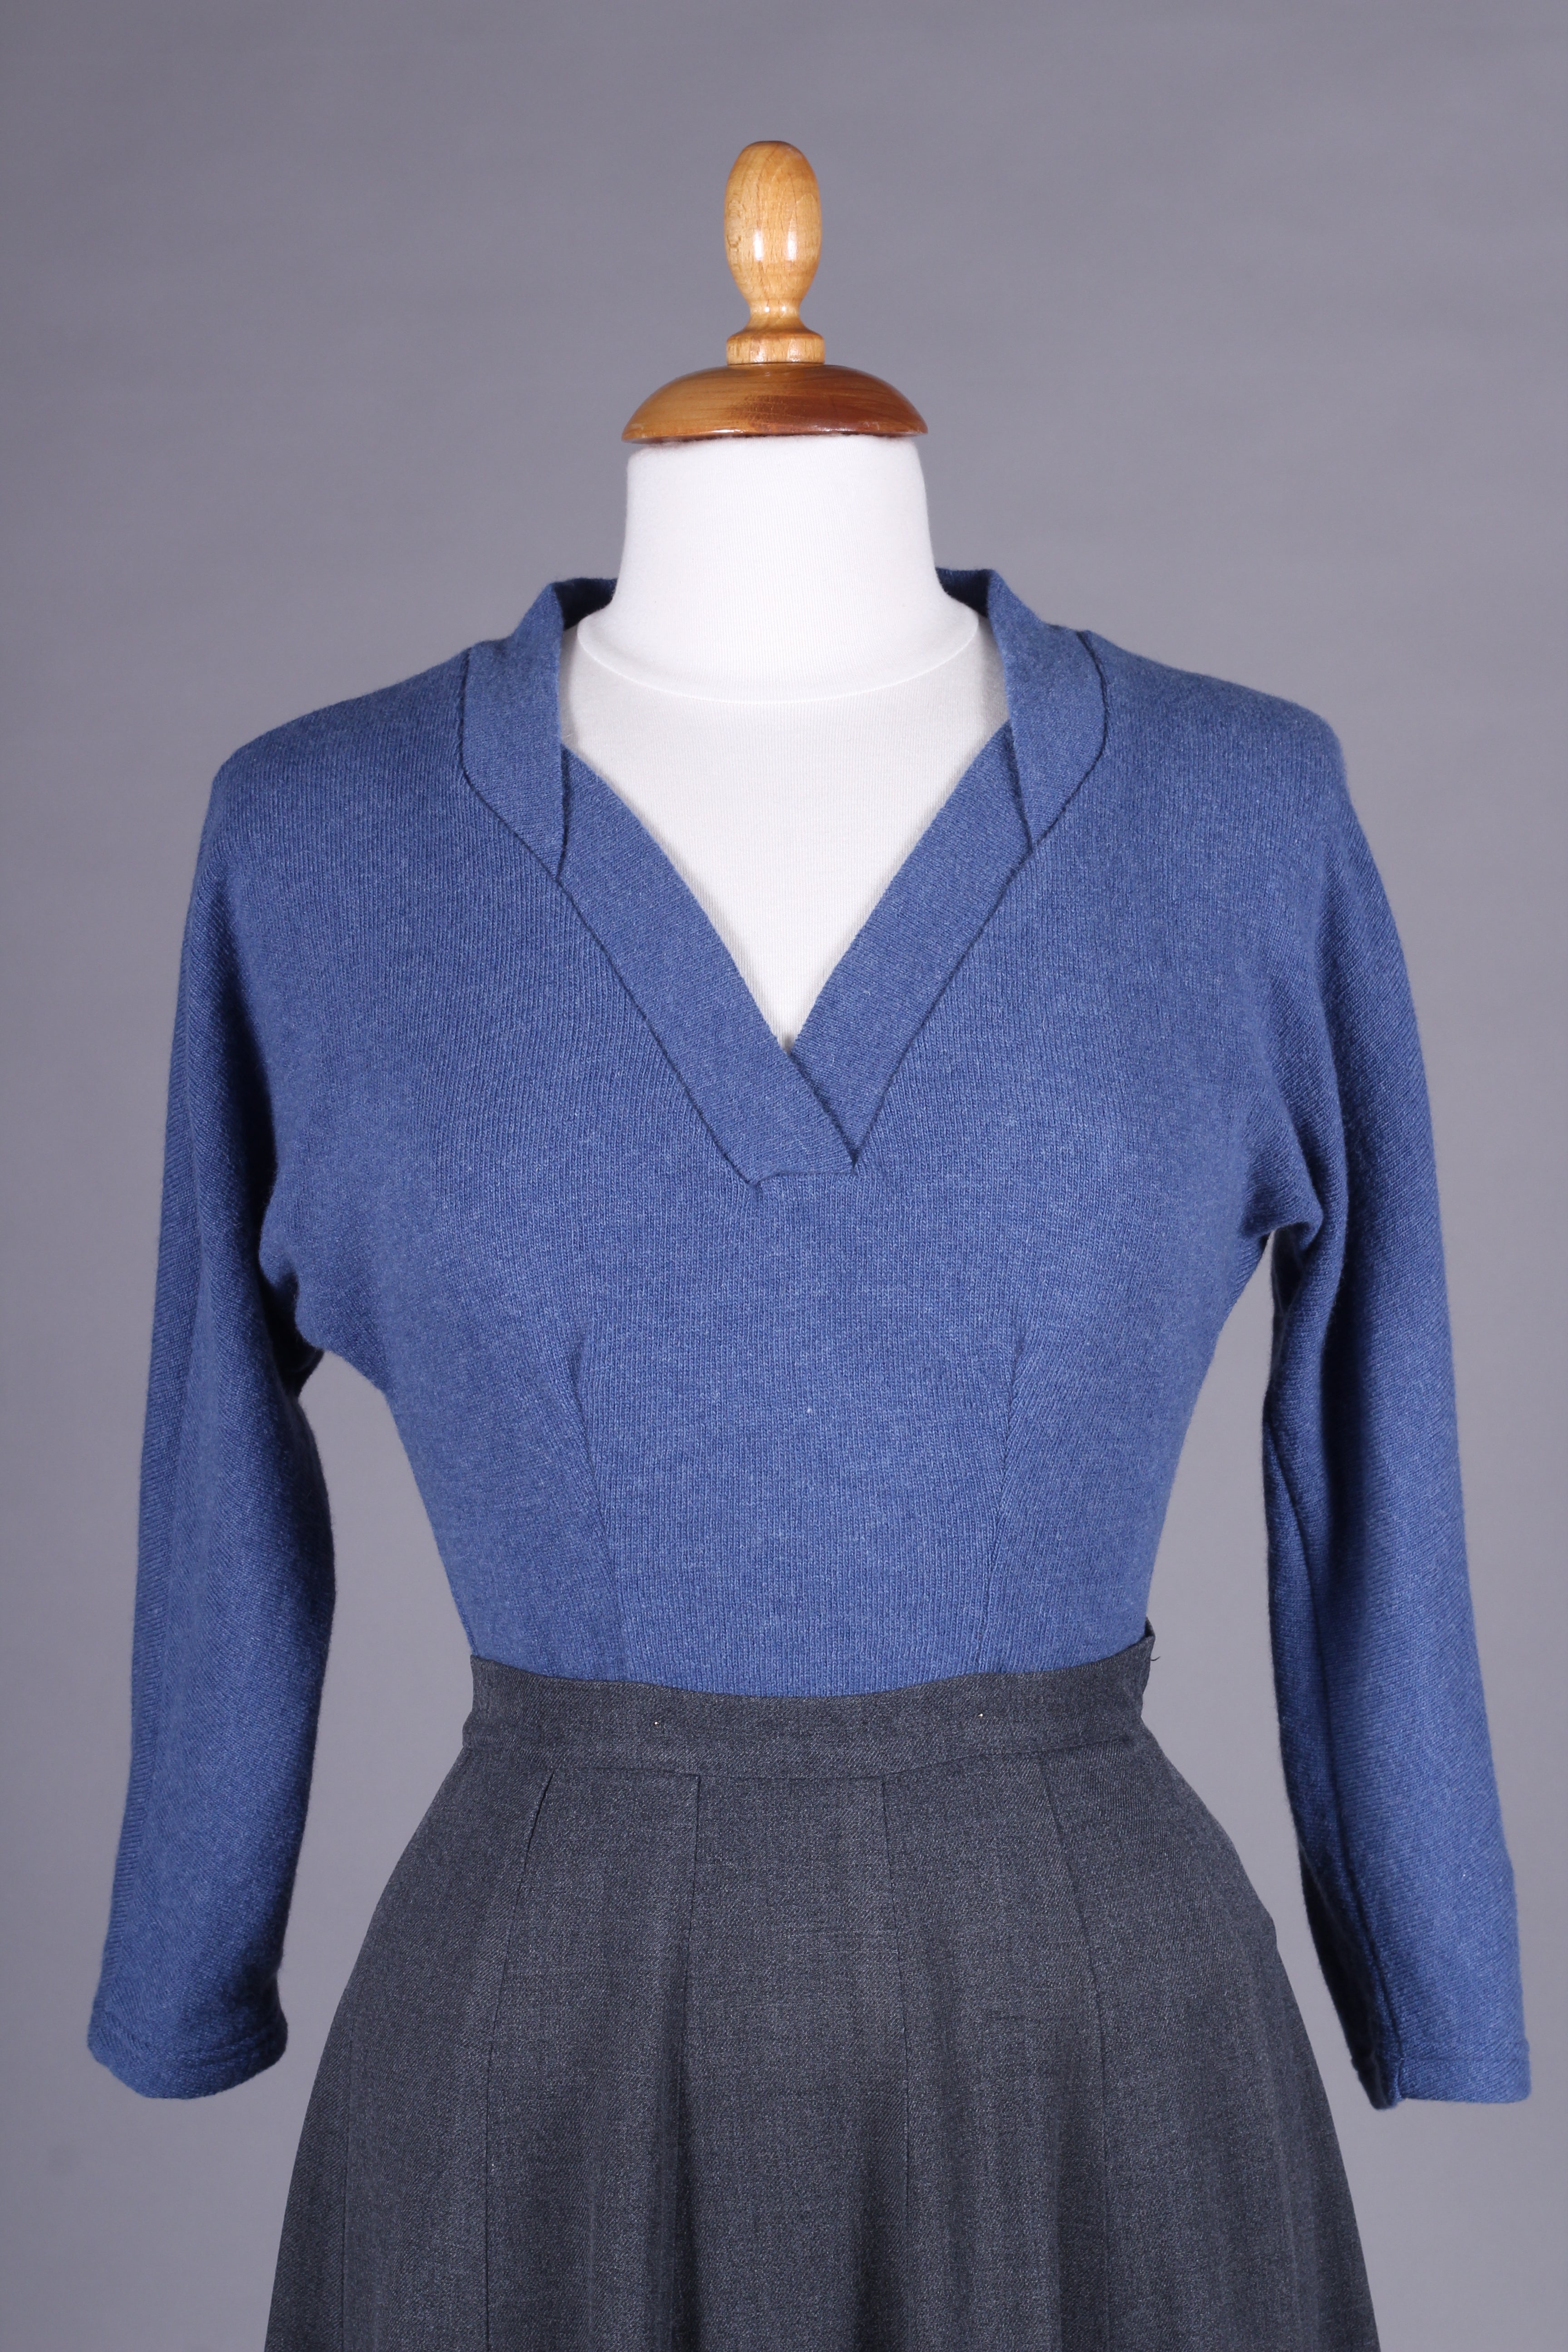 1950s vintage style pullover - Light blue - Elsa